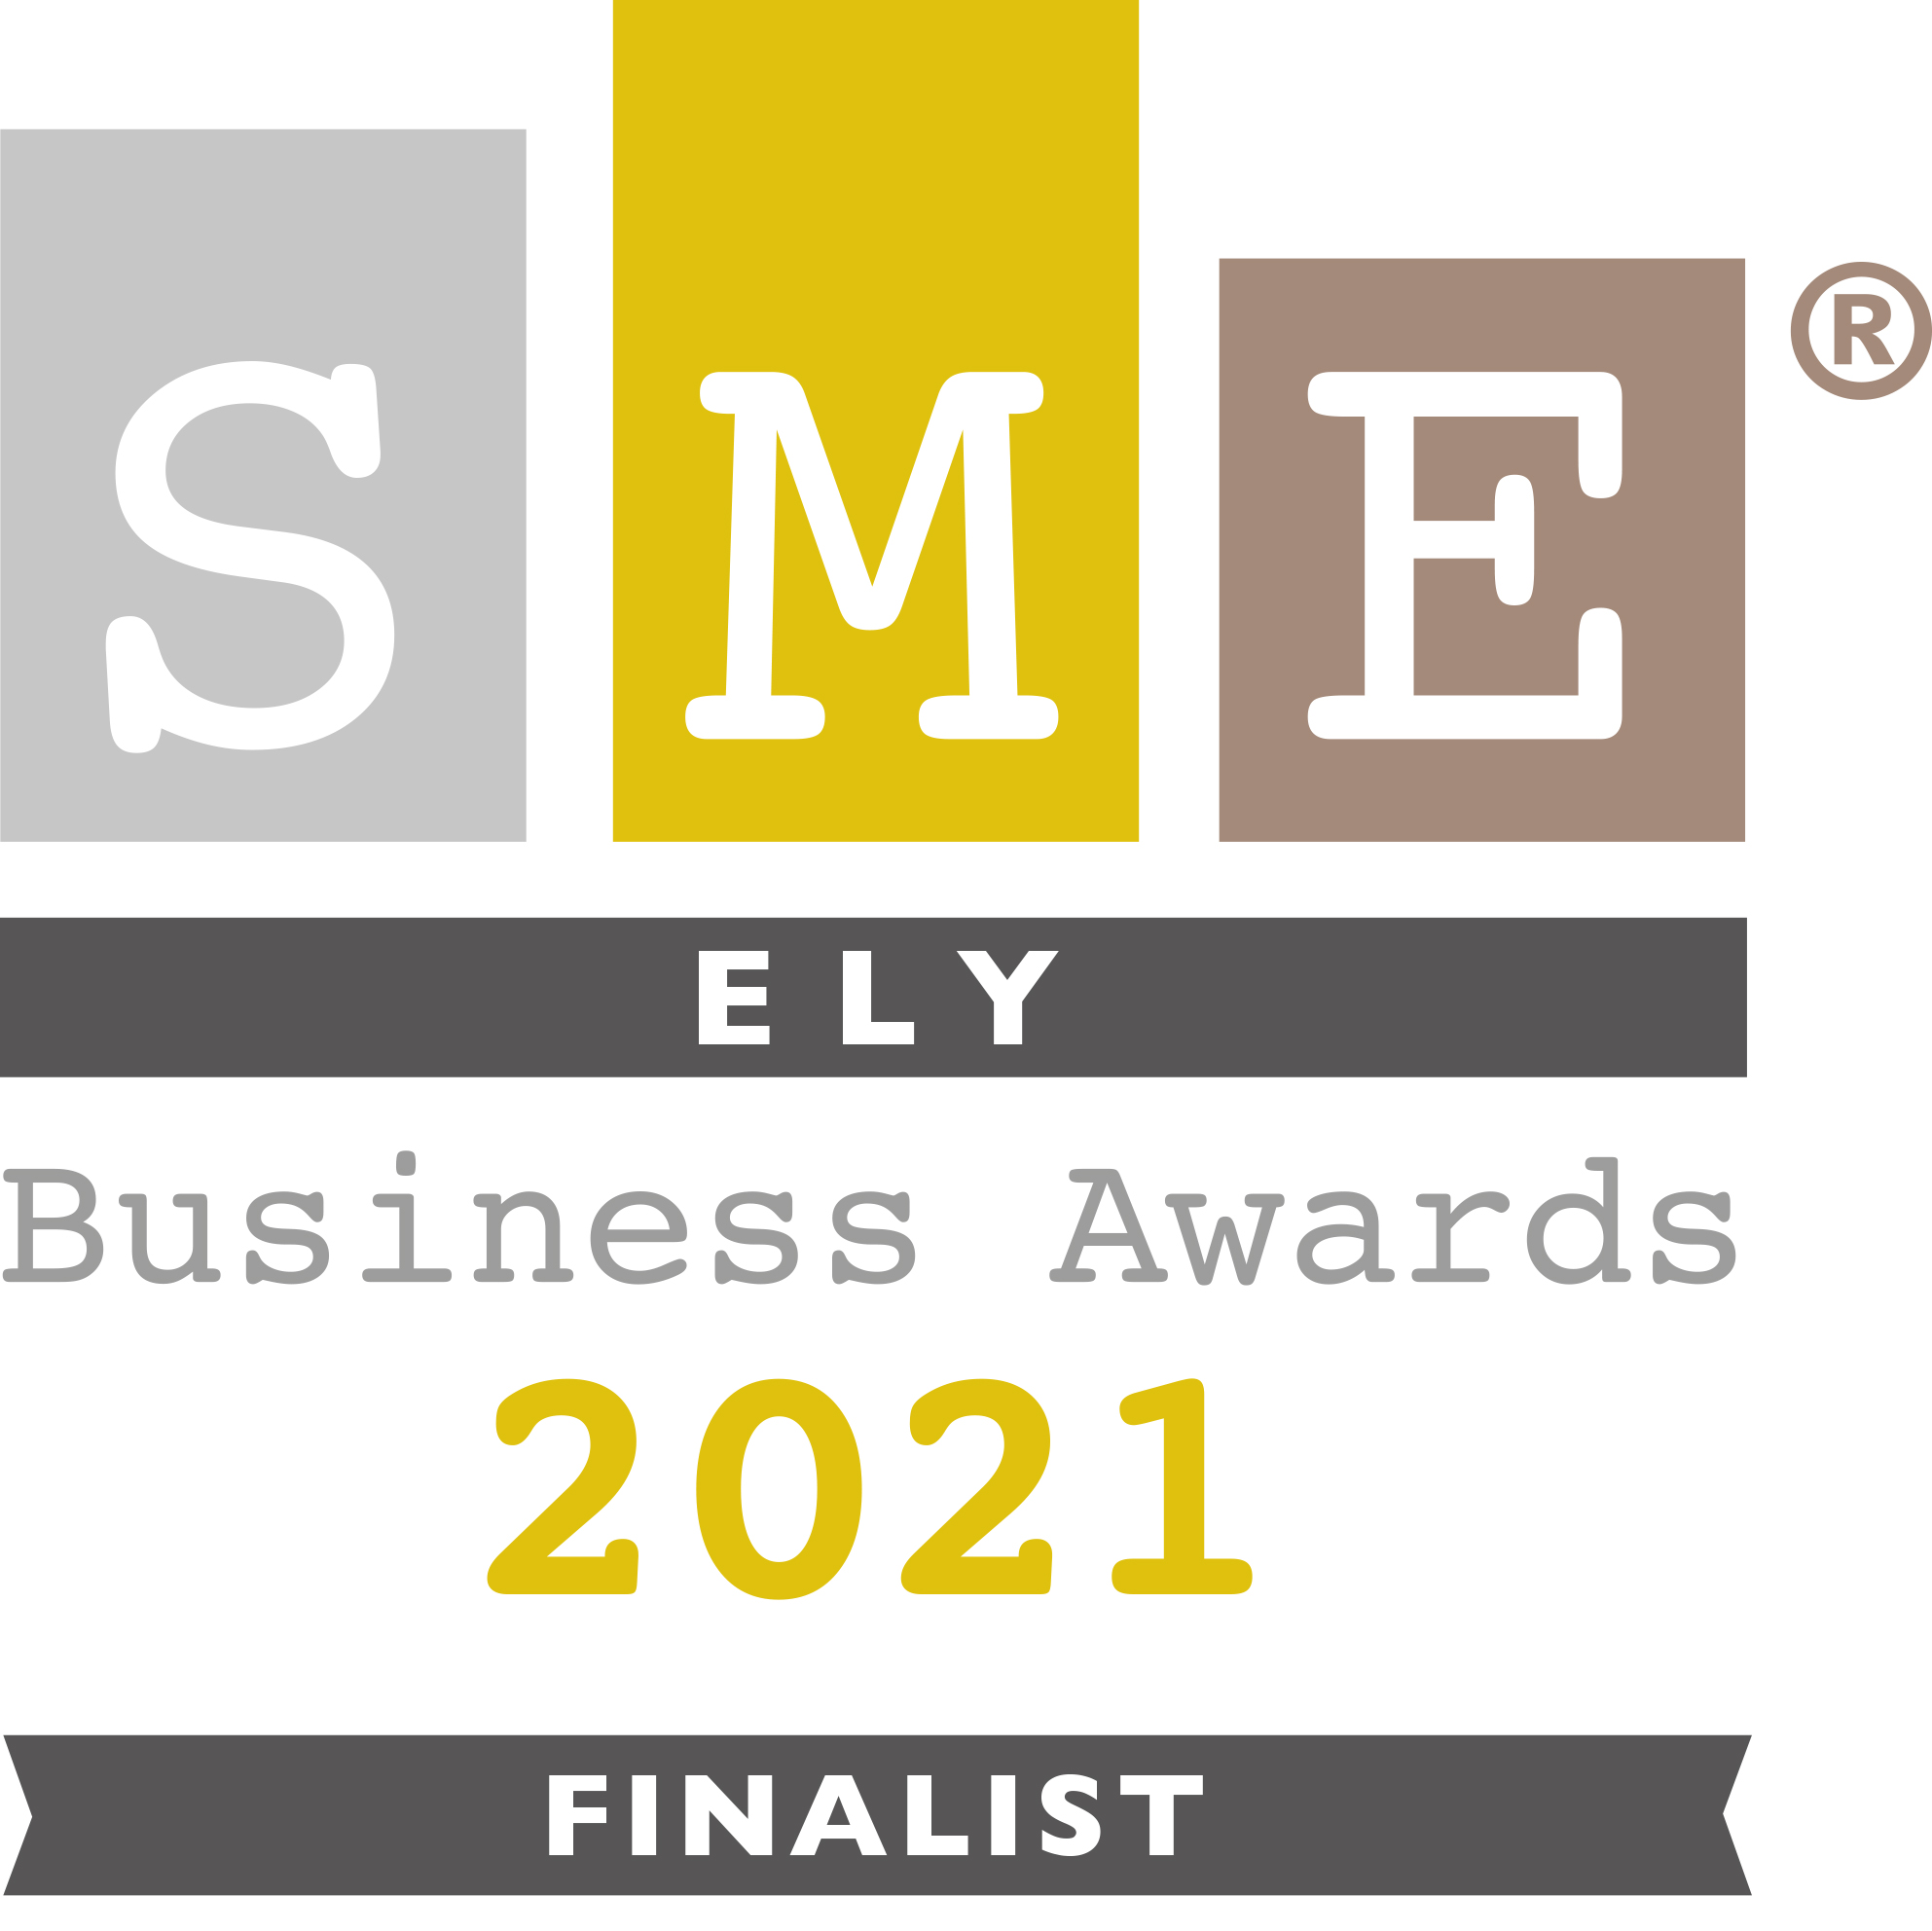 ely business awards finalist - dan regan hypnotherapy ely